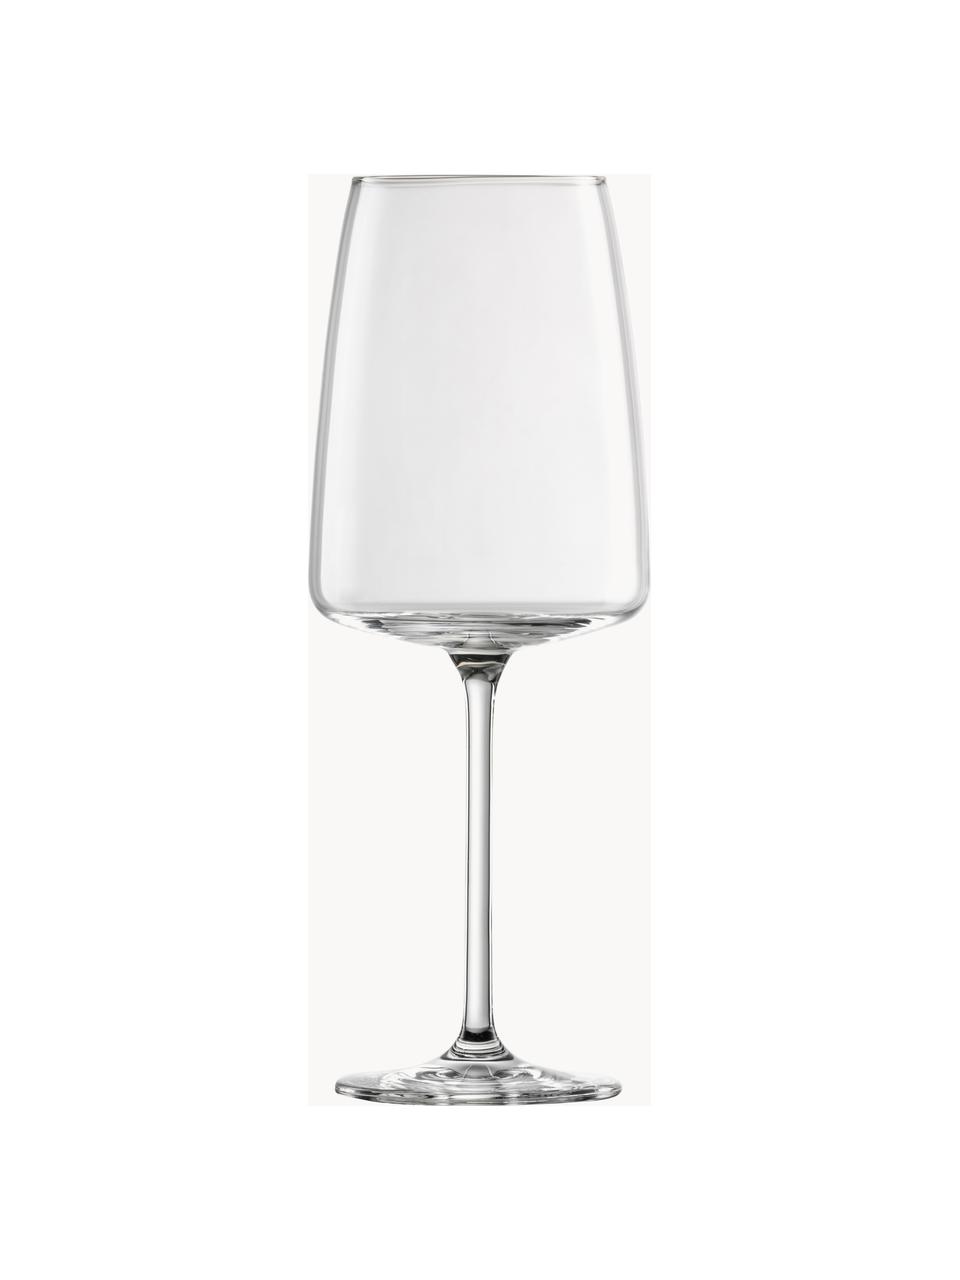 Kristall-Weingläser fruchtig & fein Vivid Senses, 2 Stück, Tritan-Kristallglas, Transparent, Ø 9 x H 24 cm, 530 ml